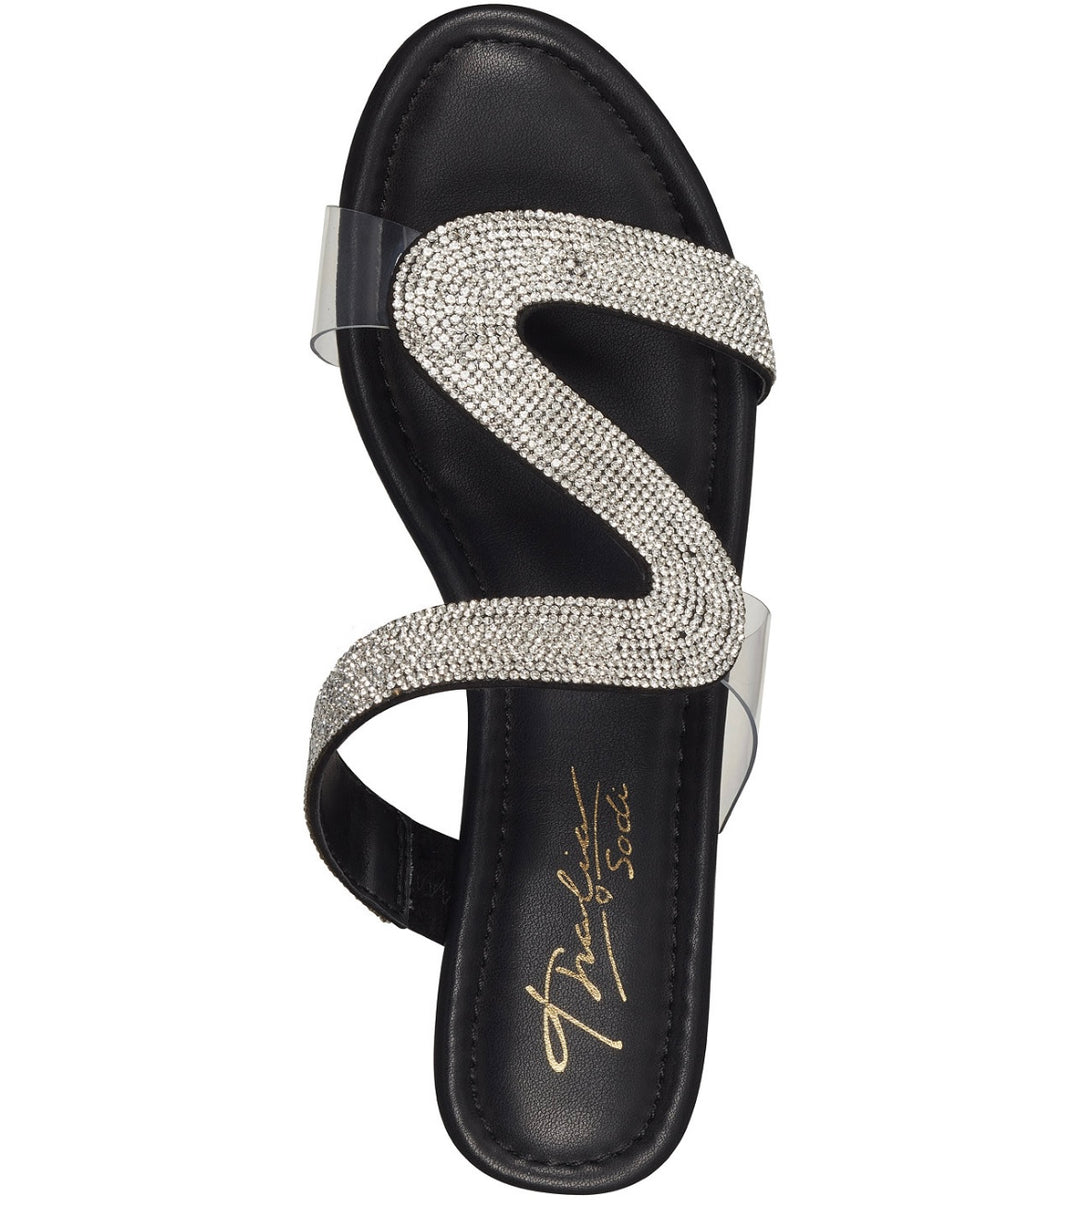 Thalia Sodi Women's Bianca Faux Leather Rhinestone Slide Sandals Black Size 8.5M